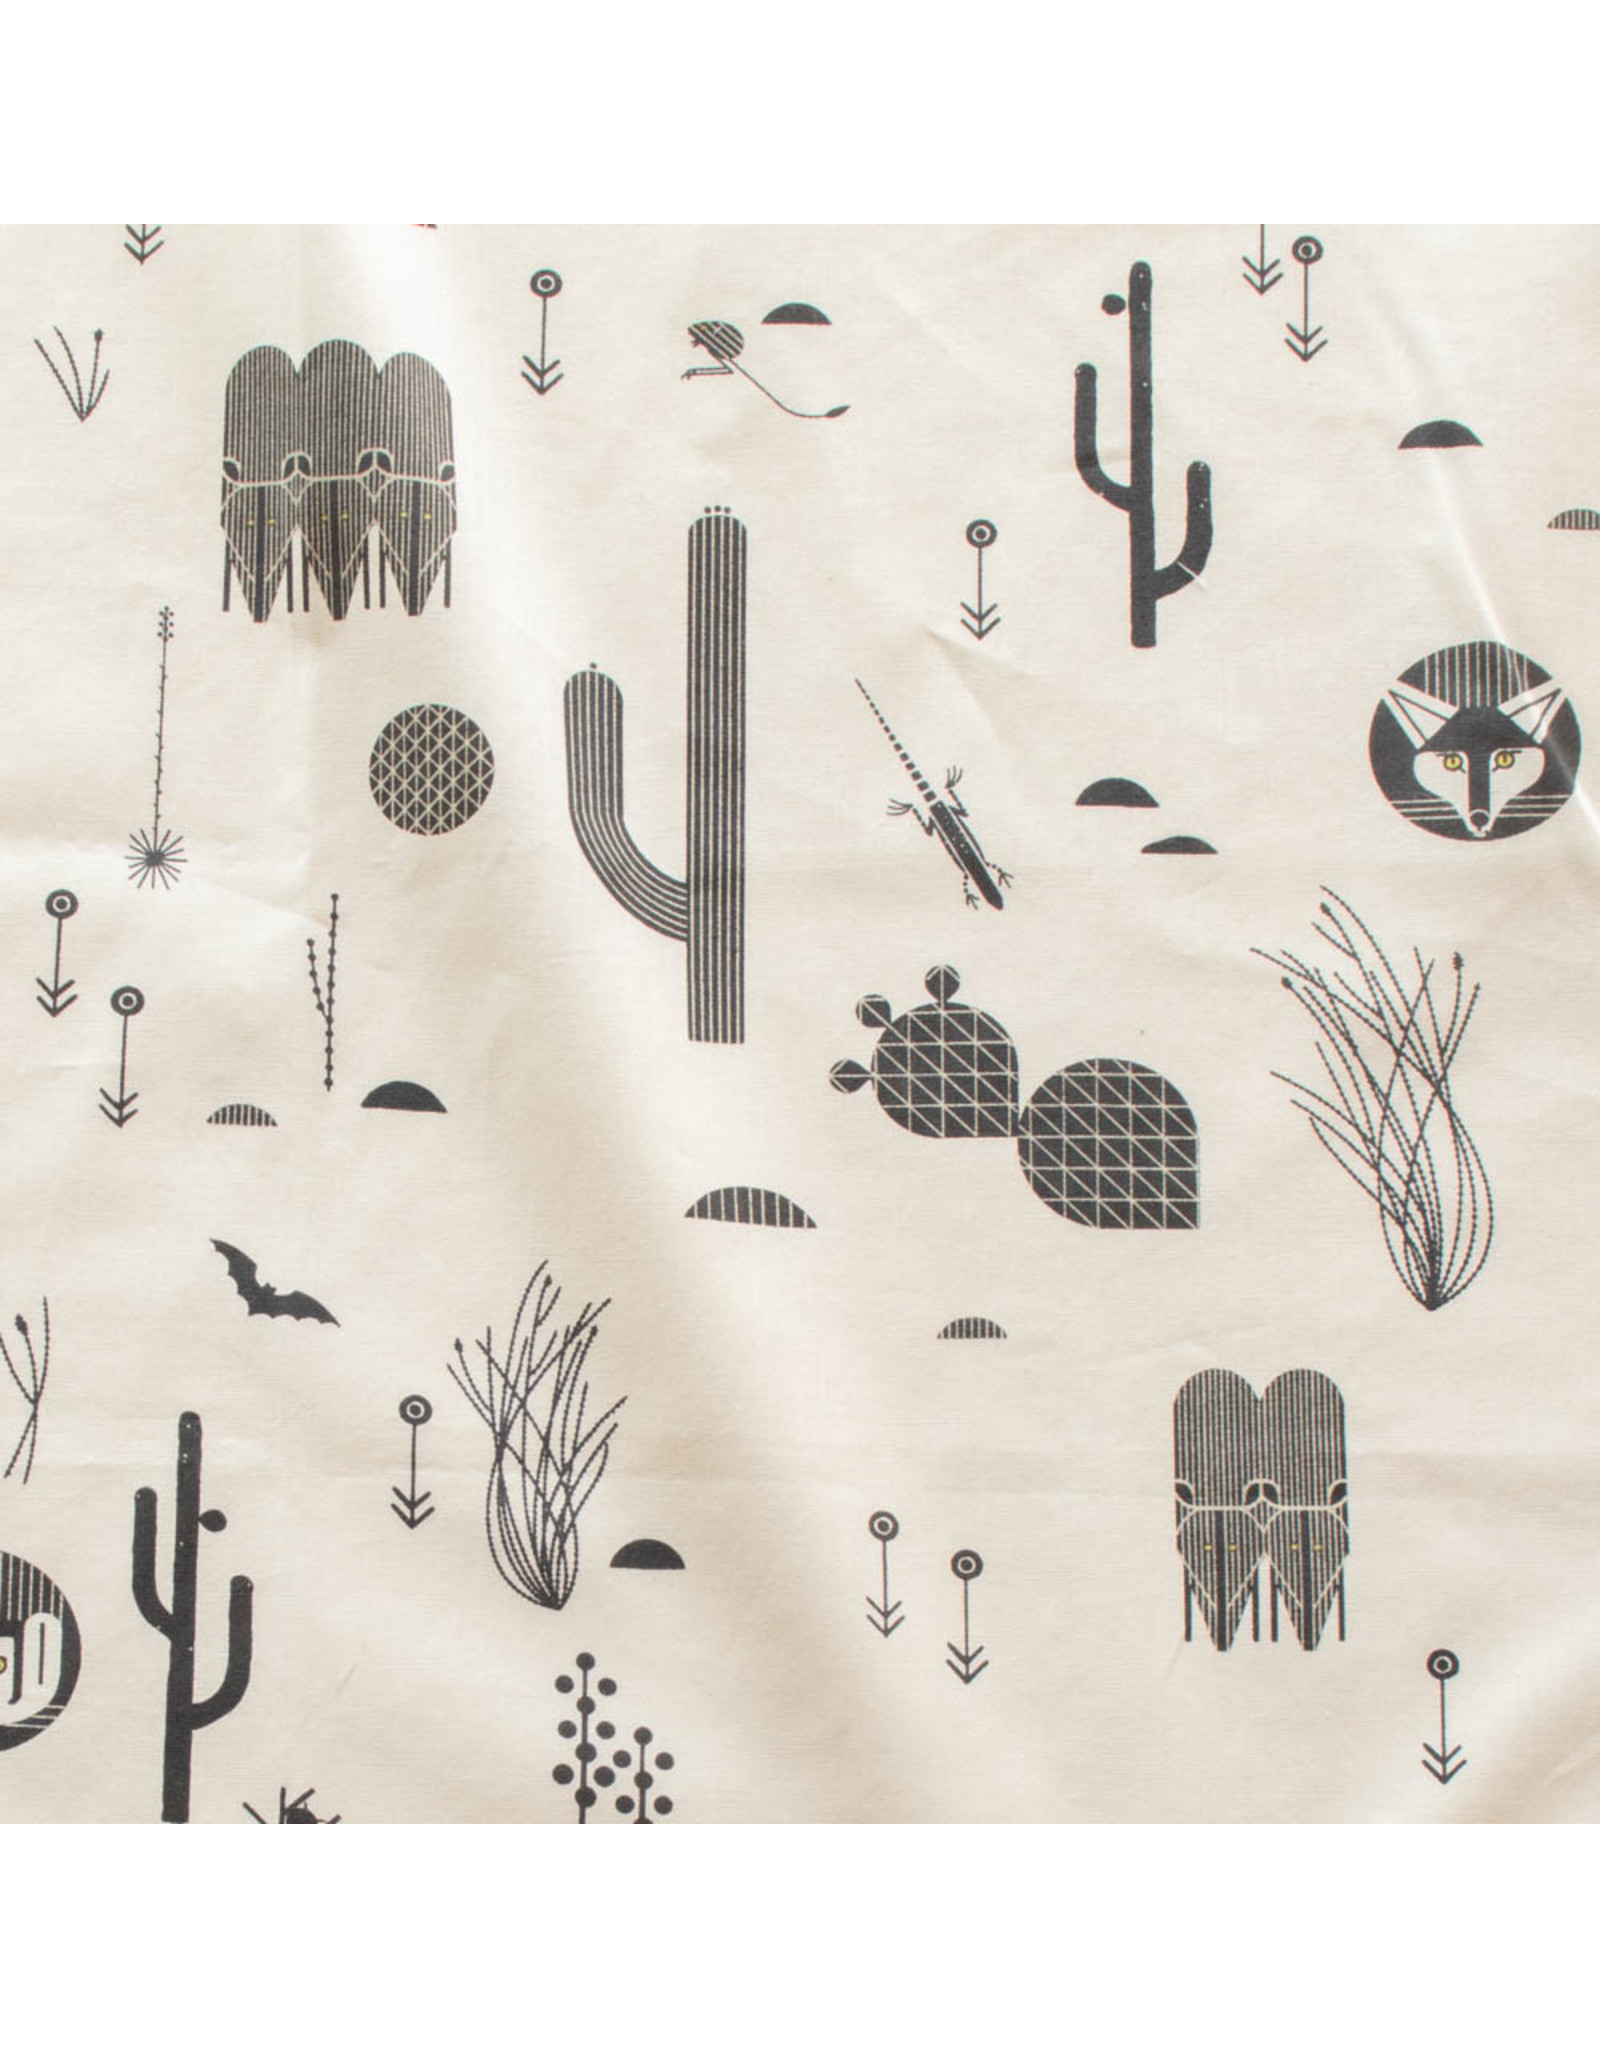 Birch Fabrics Charley Harper - The Desert - Desert Silhouettes Cream - CH-219-CREAM